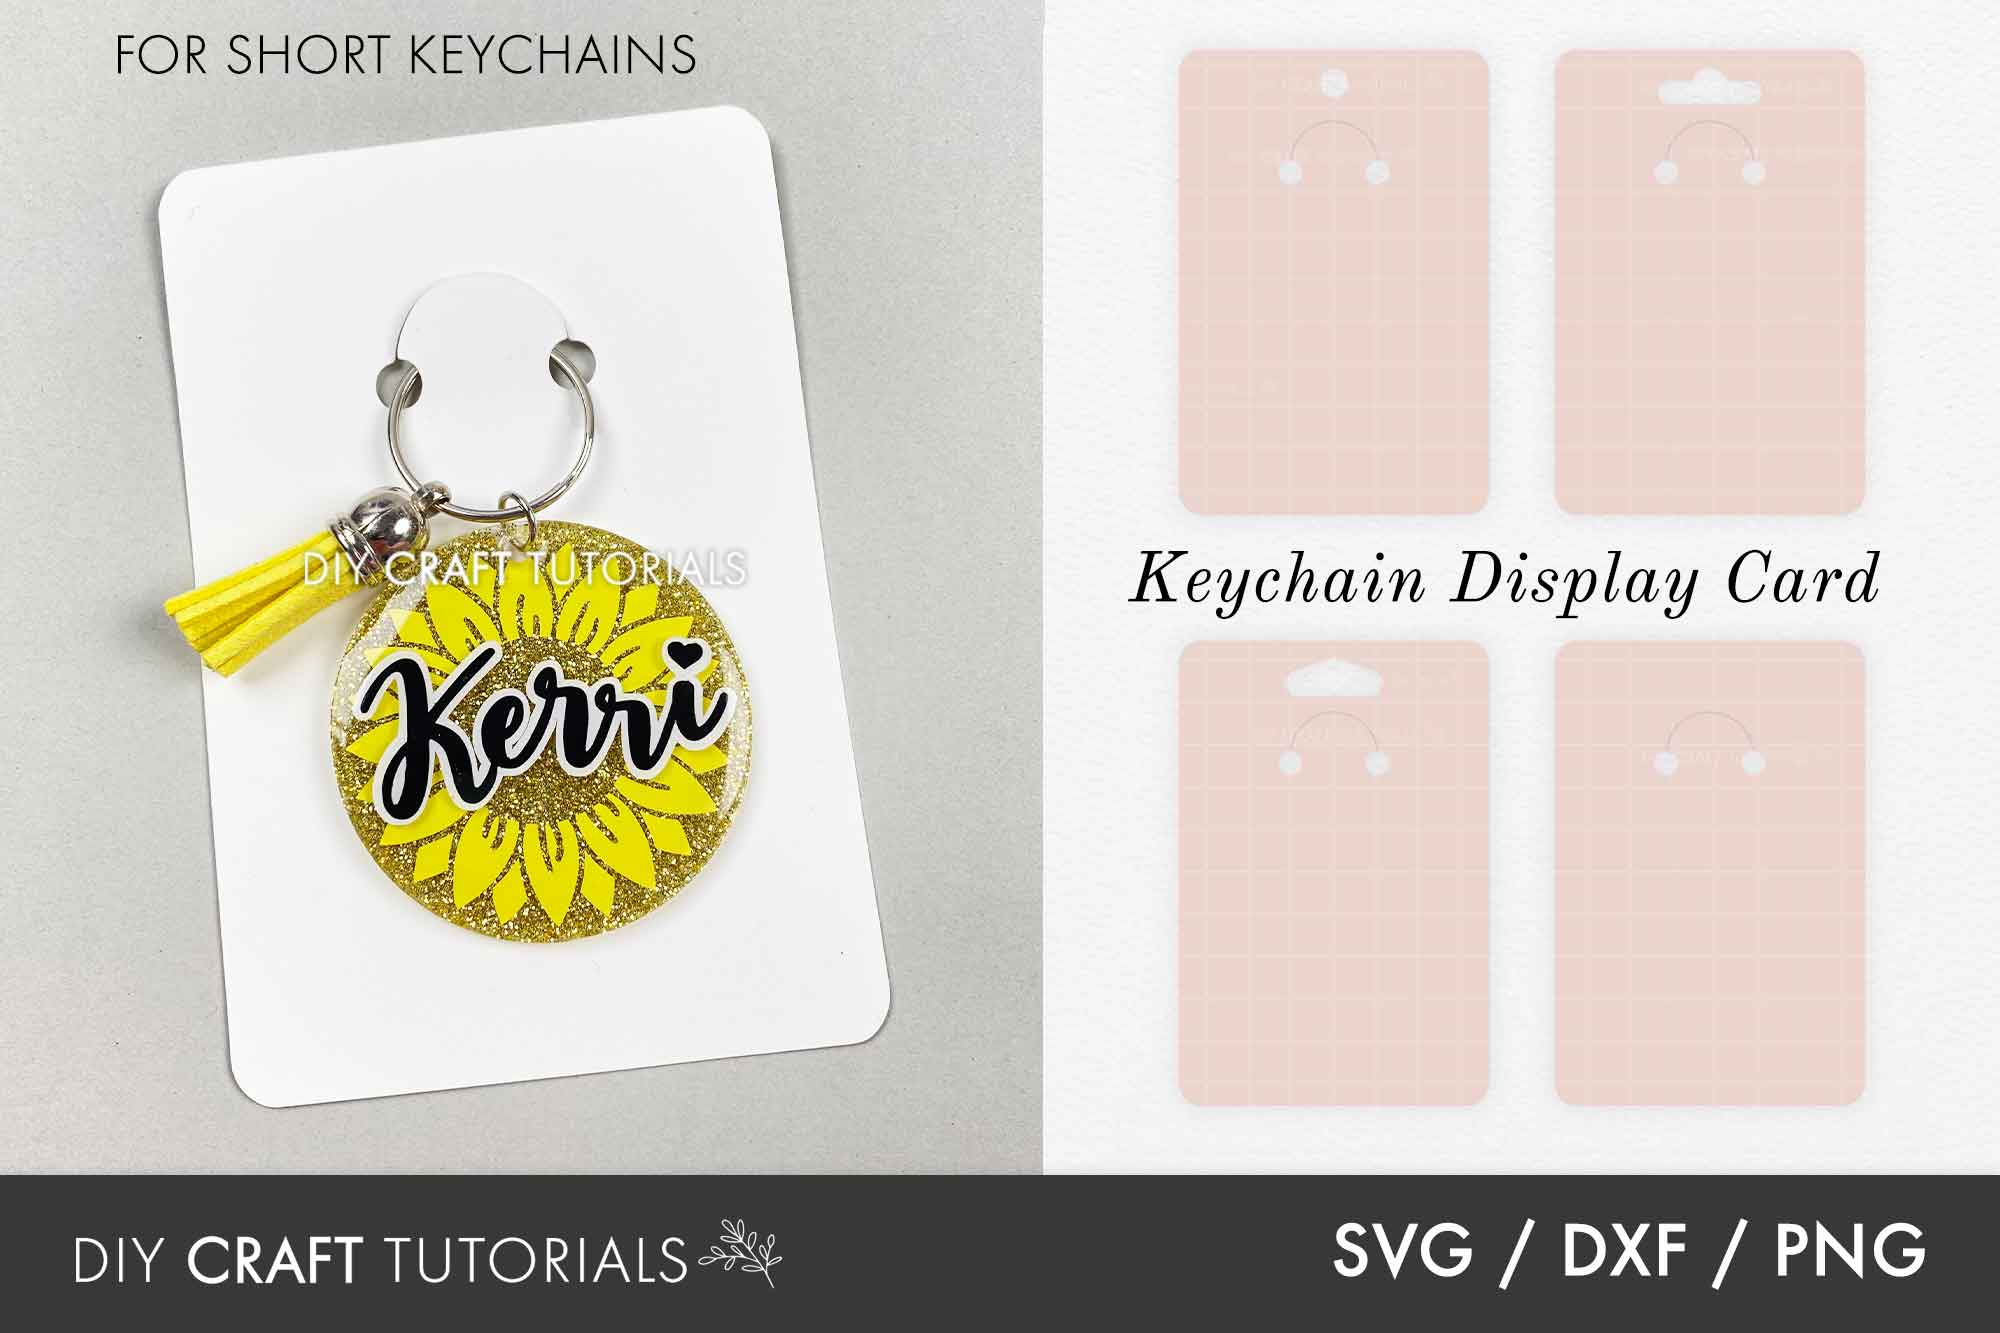 Key chain display cards DIY  Keychain display, Display cards, Jewelry display  cards